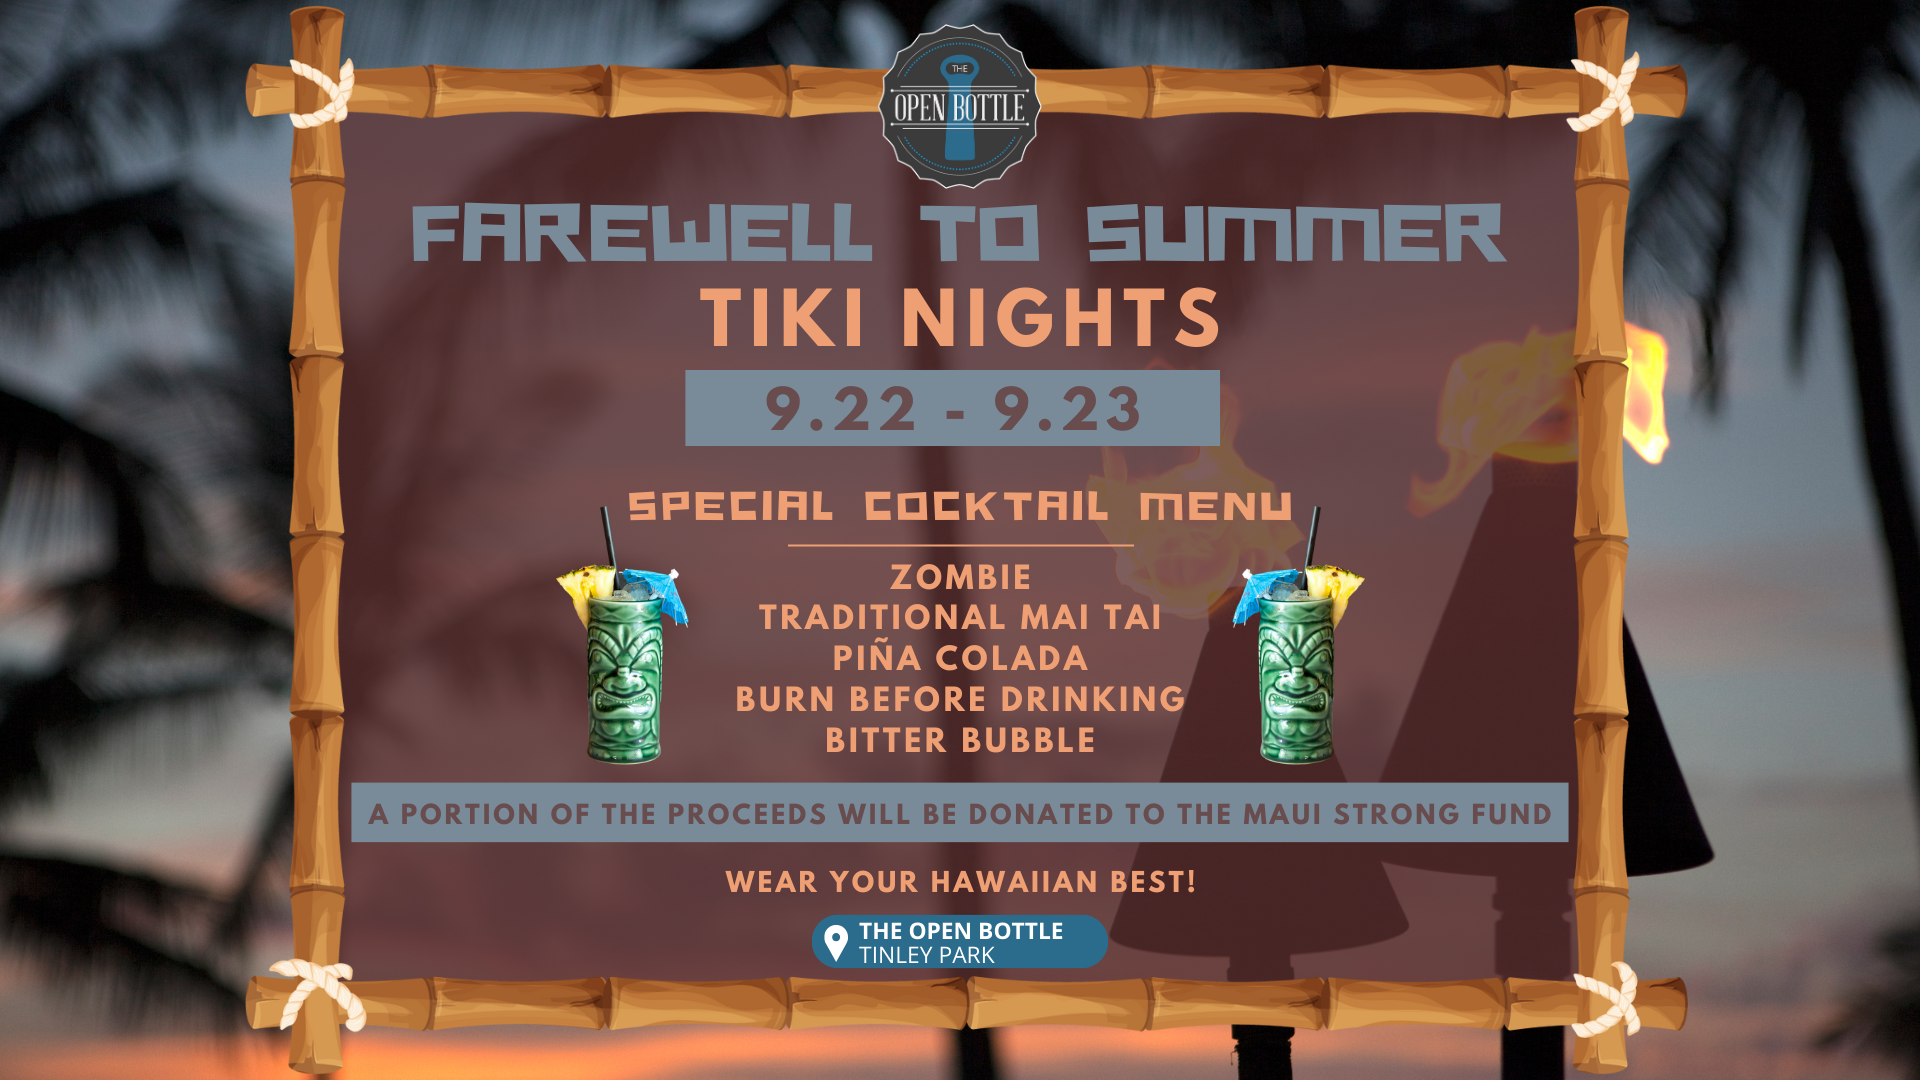 Event: Farewell to Summer Tiki Nights